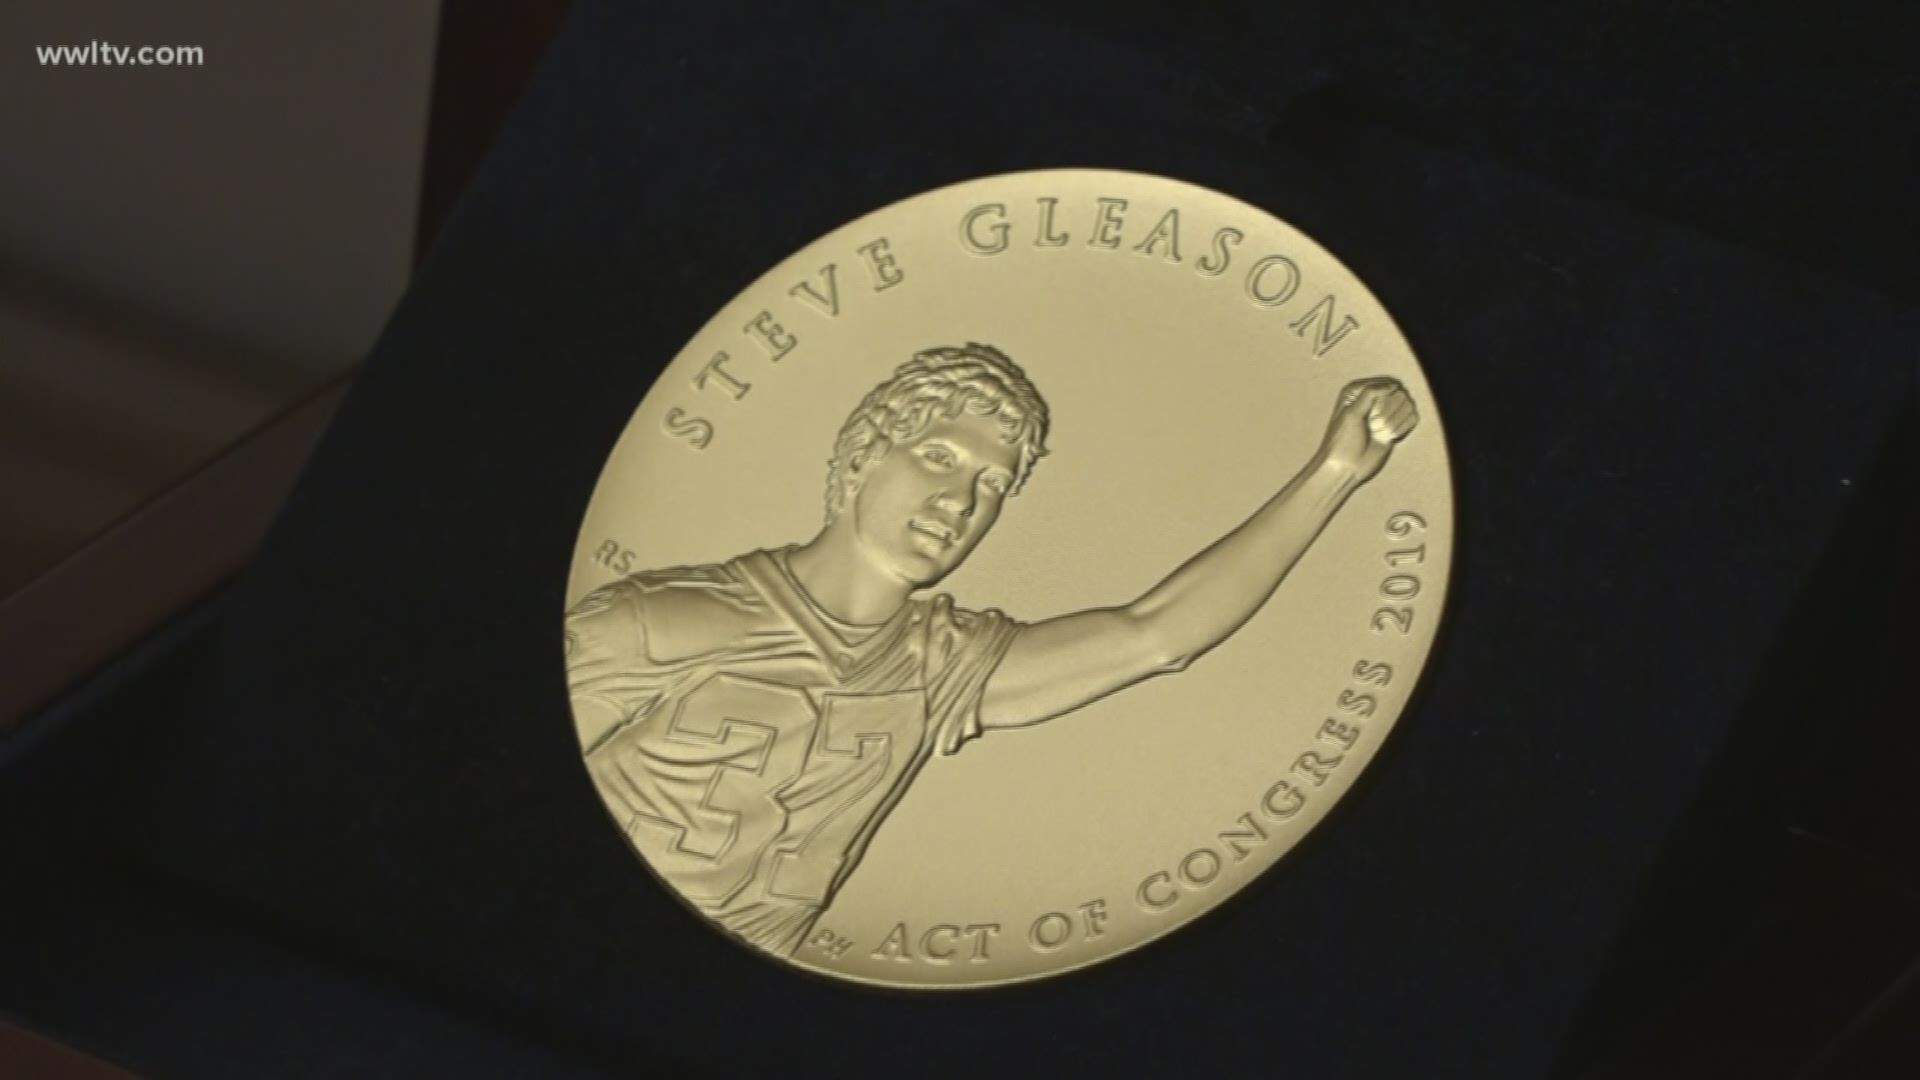 Did Football Cause Steve Gleason's ALS? - The Atlantic